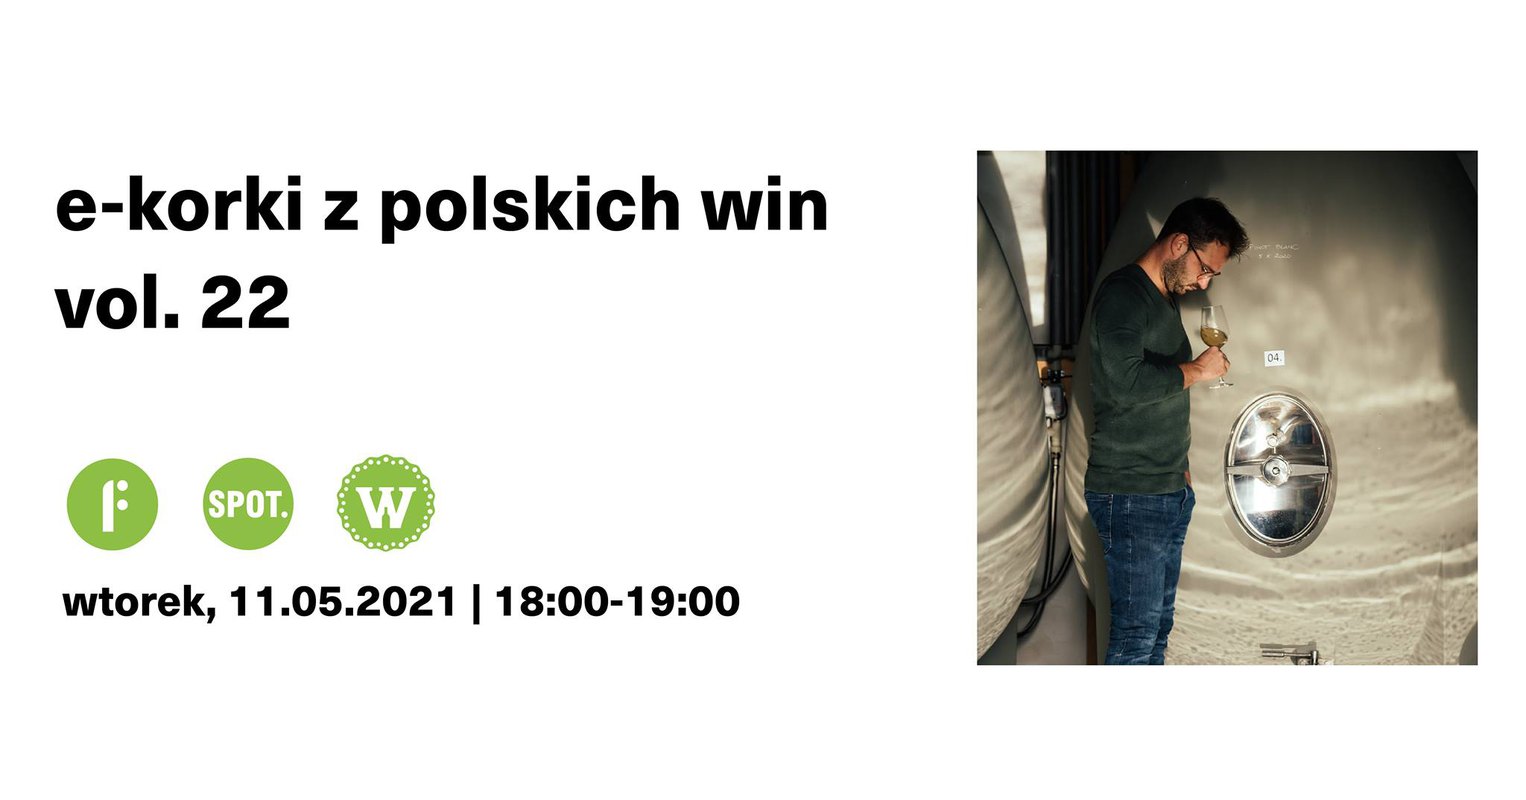 E-korki z polskich win vol. 22